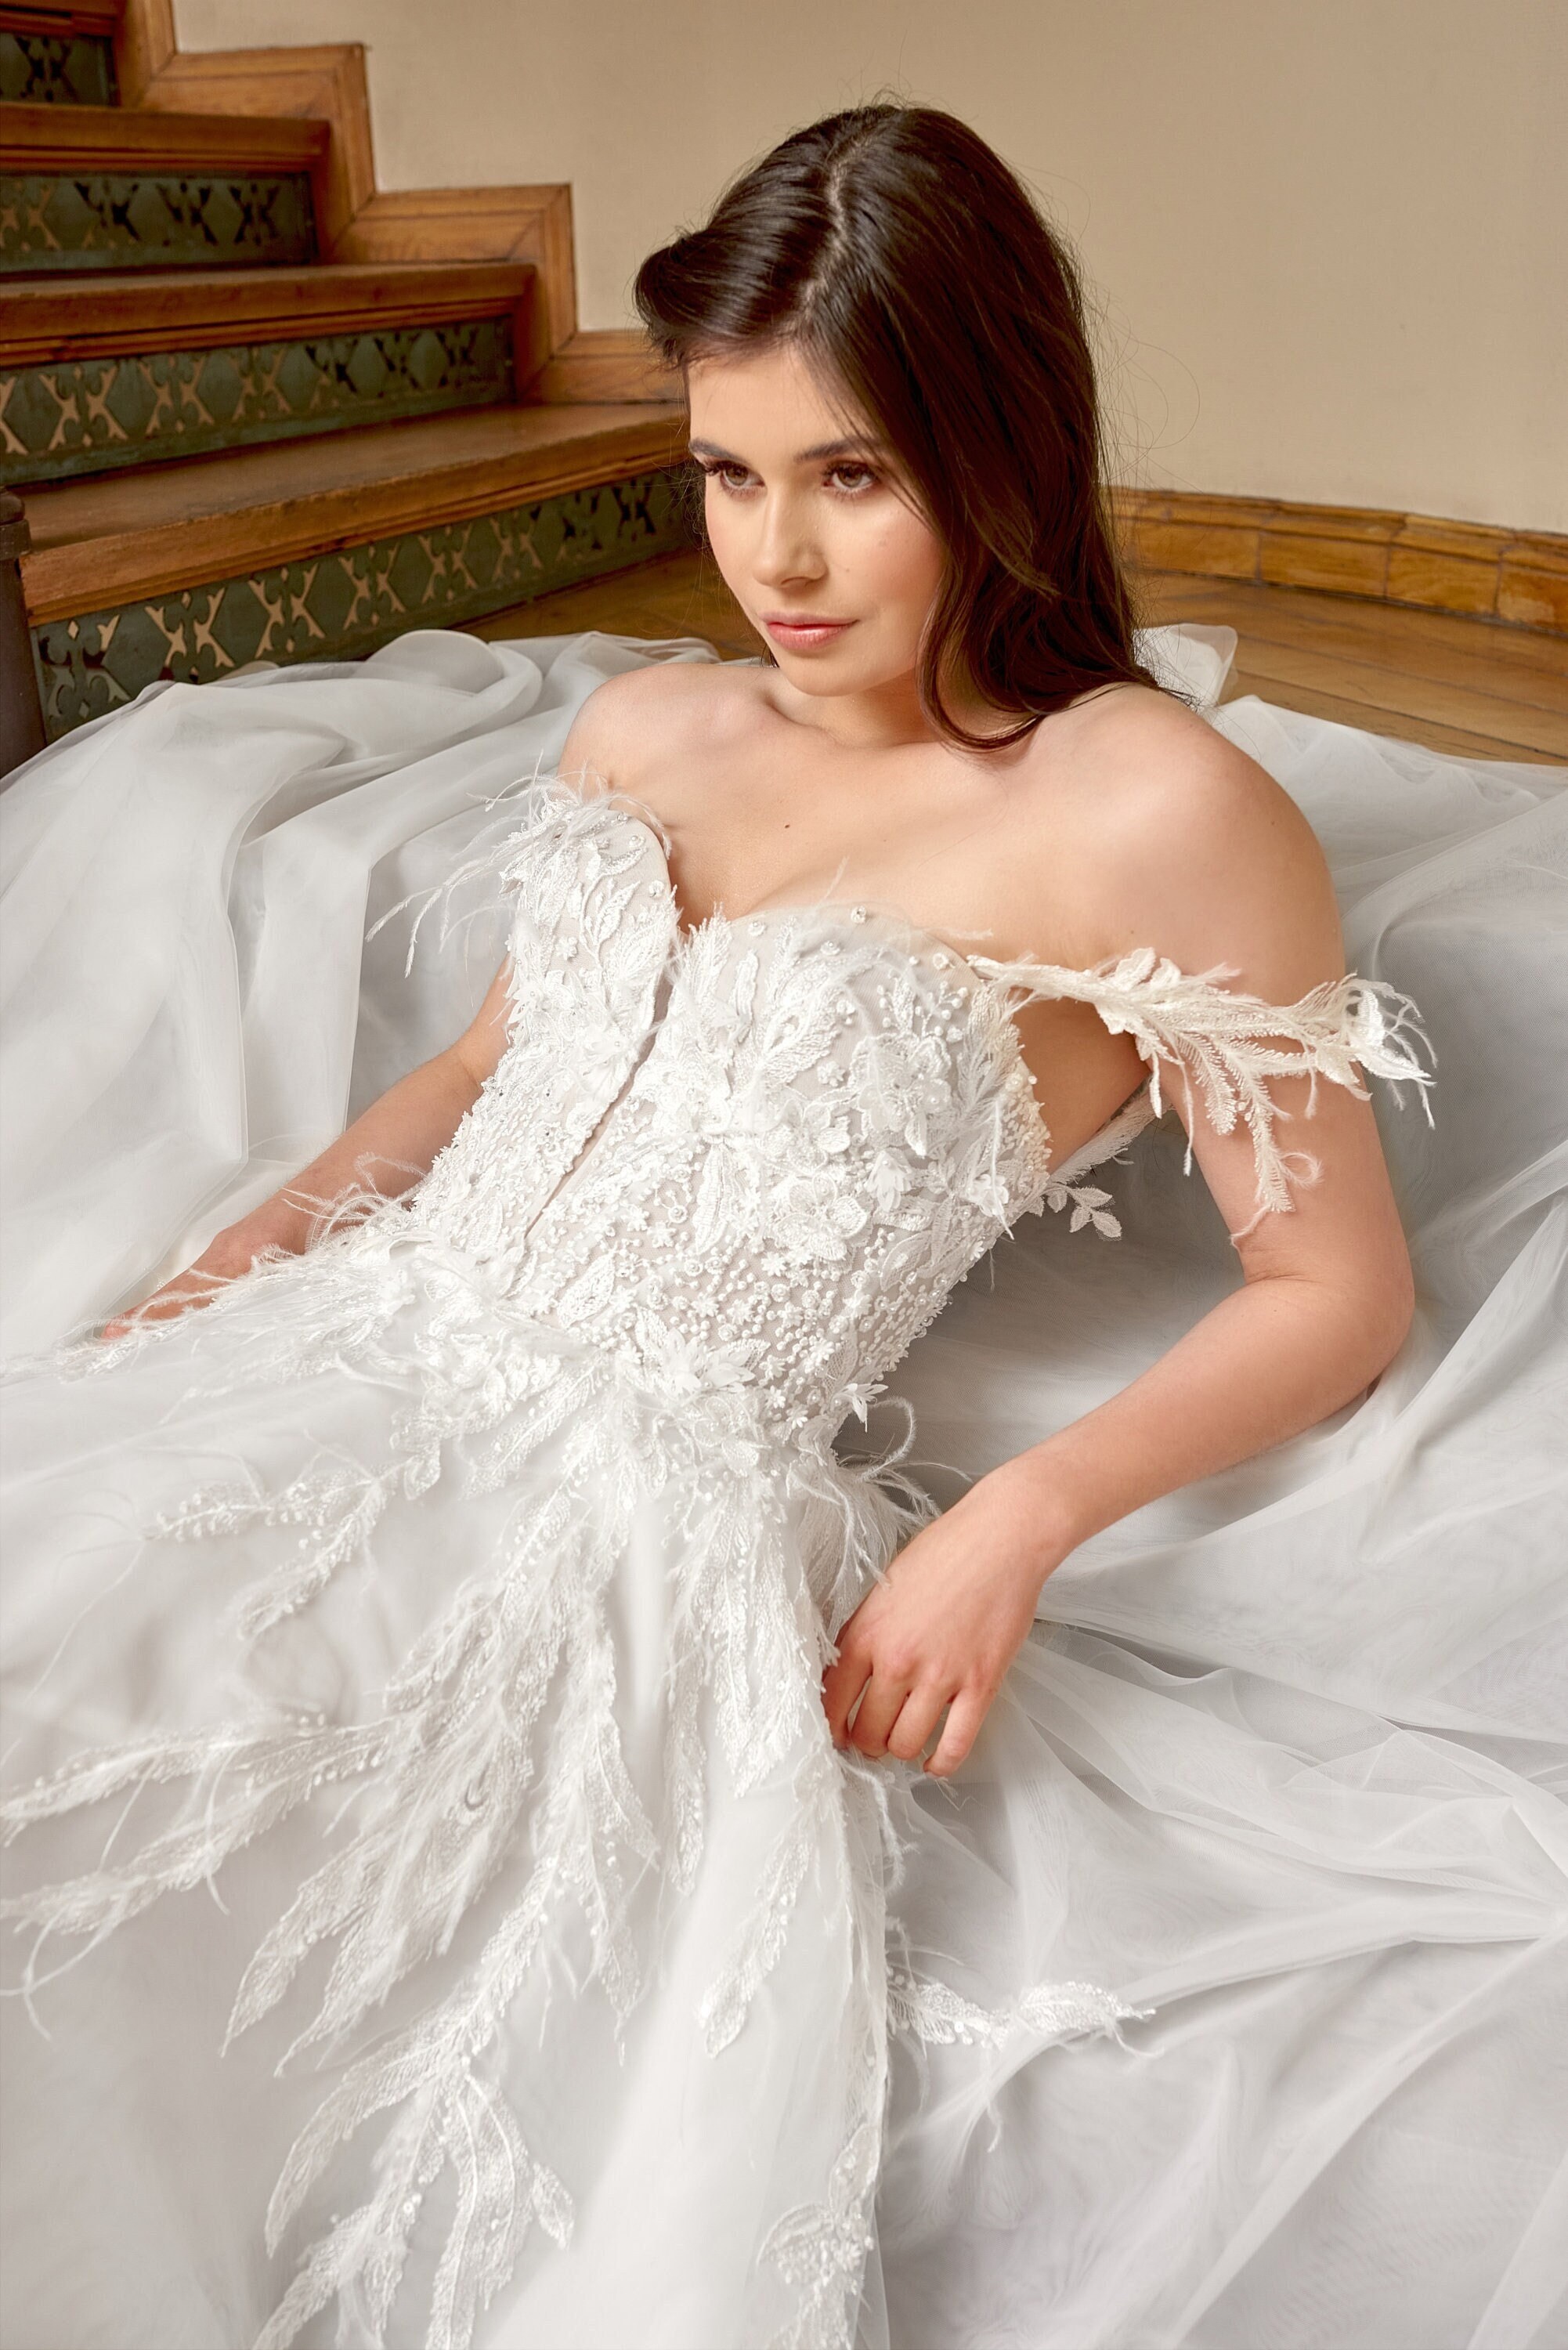 Sexy Wedding Dress DIADEM Wedding Gown With Flowers, Crystals